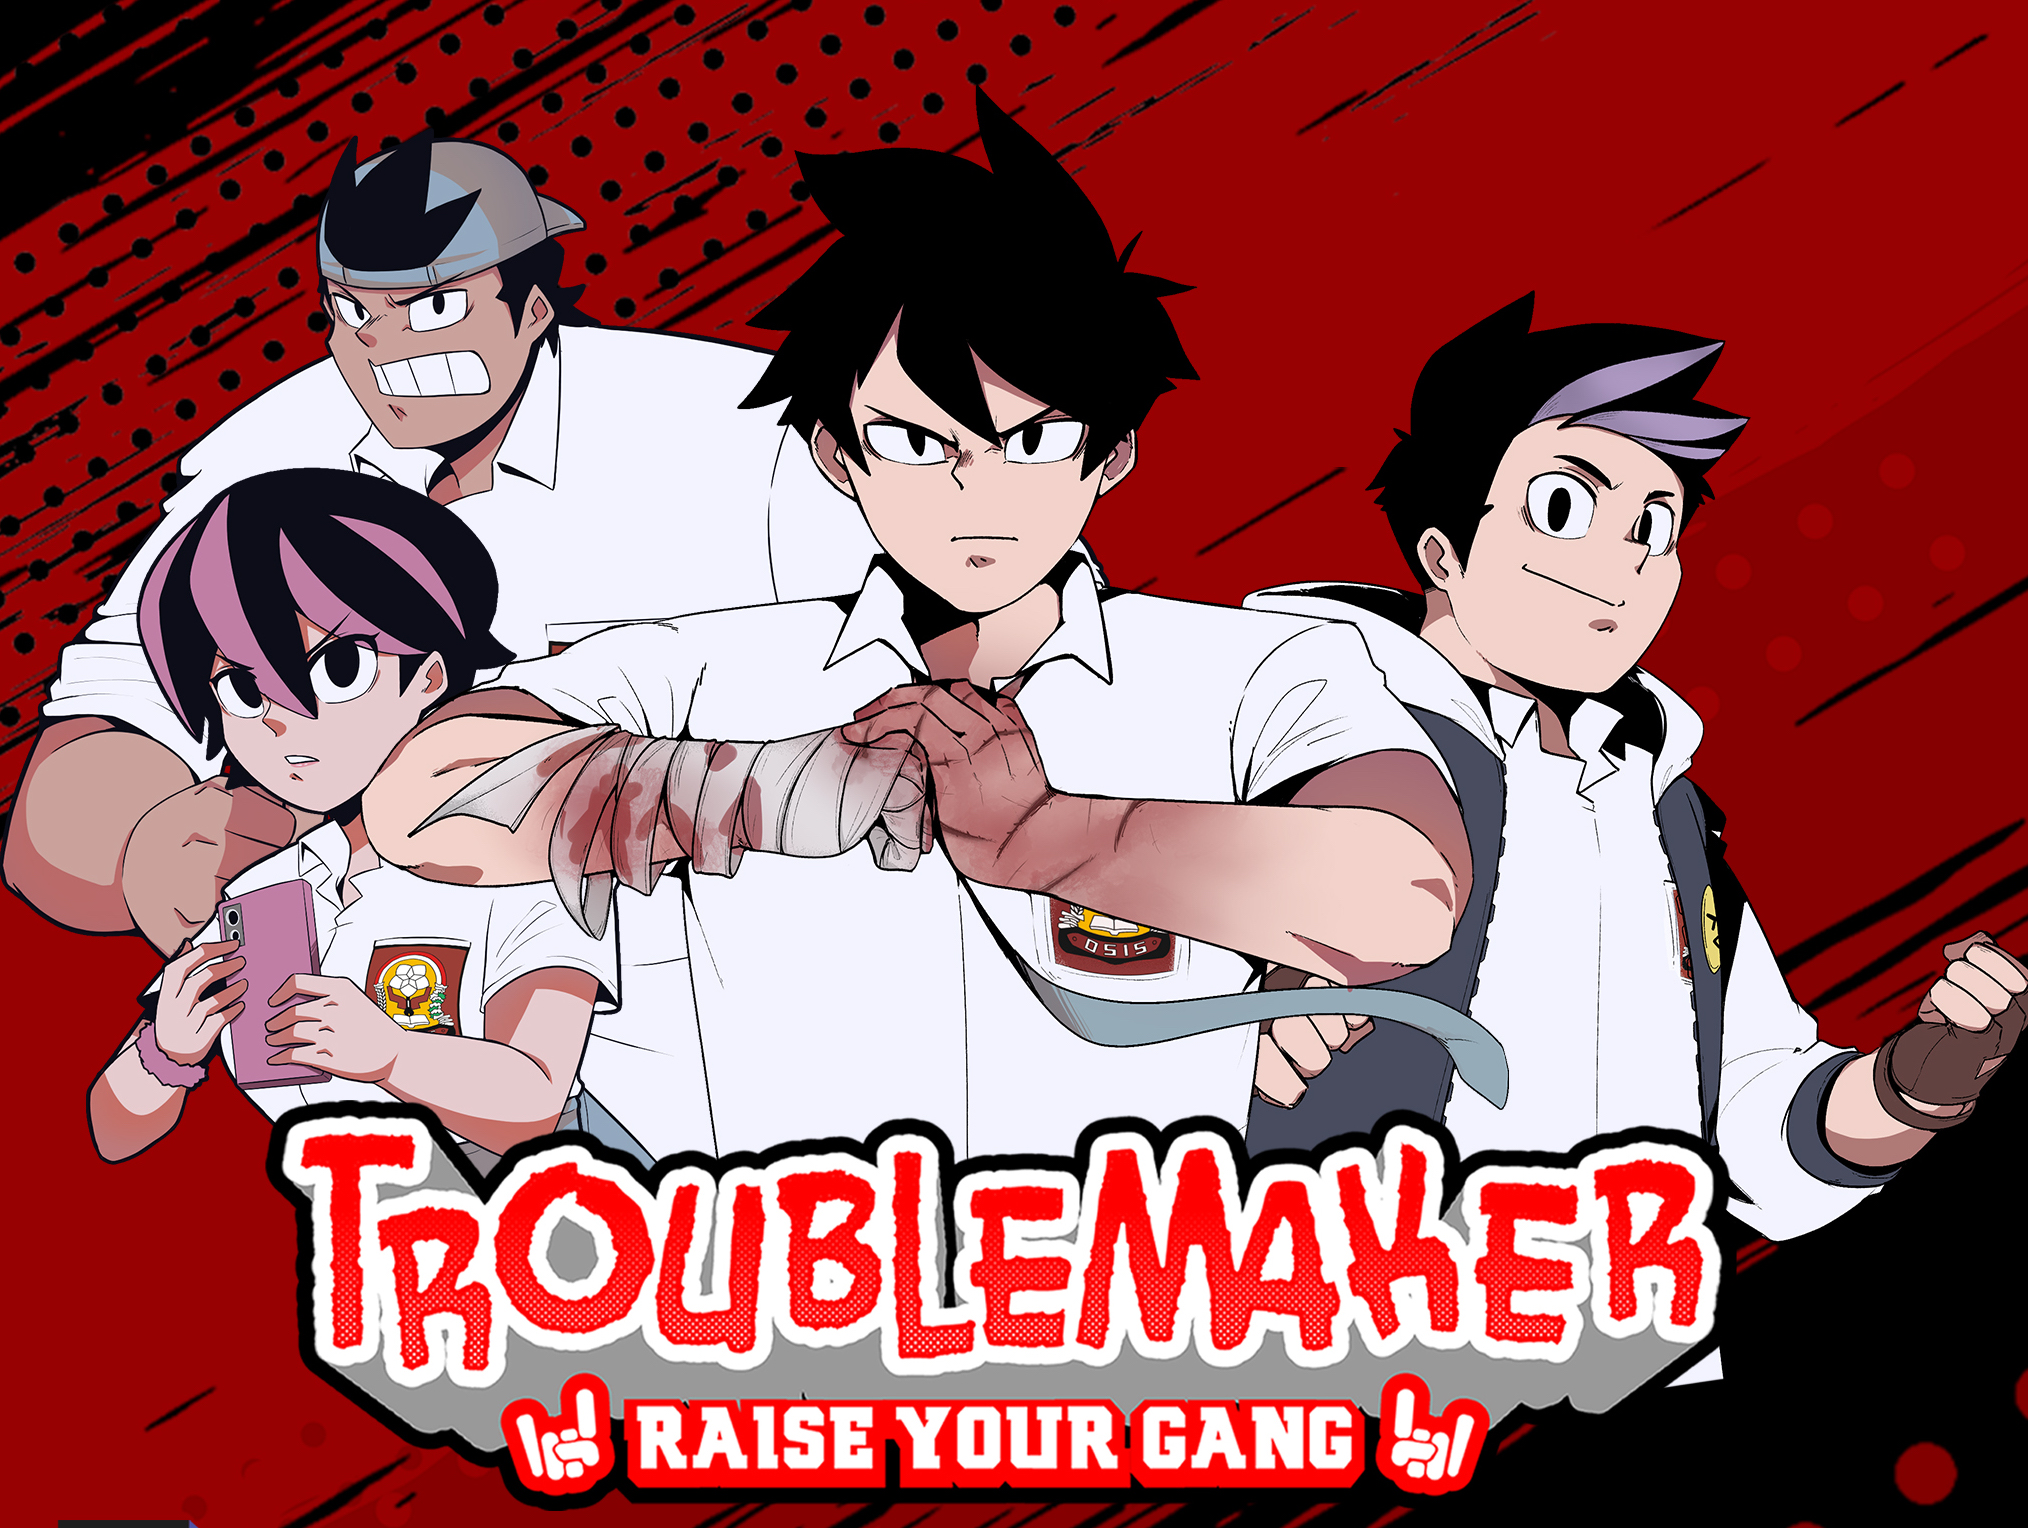 Troublemaker (Sumber gambar: Twitter.com/gamecom)